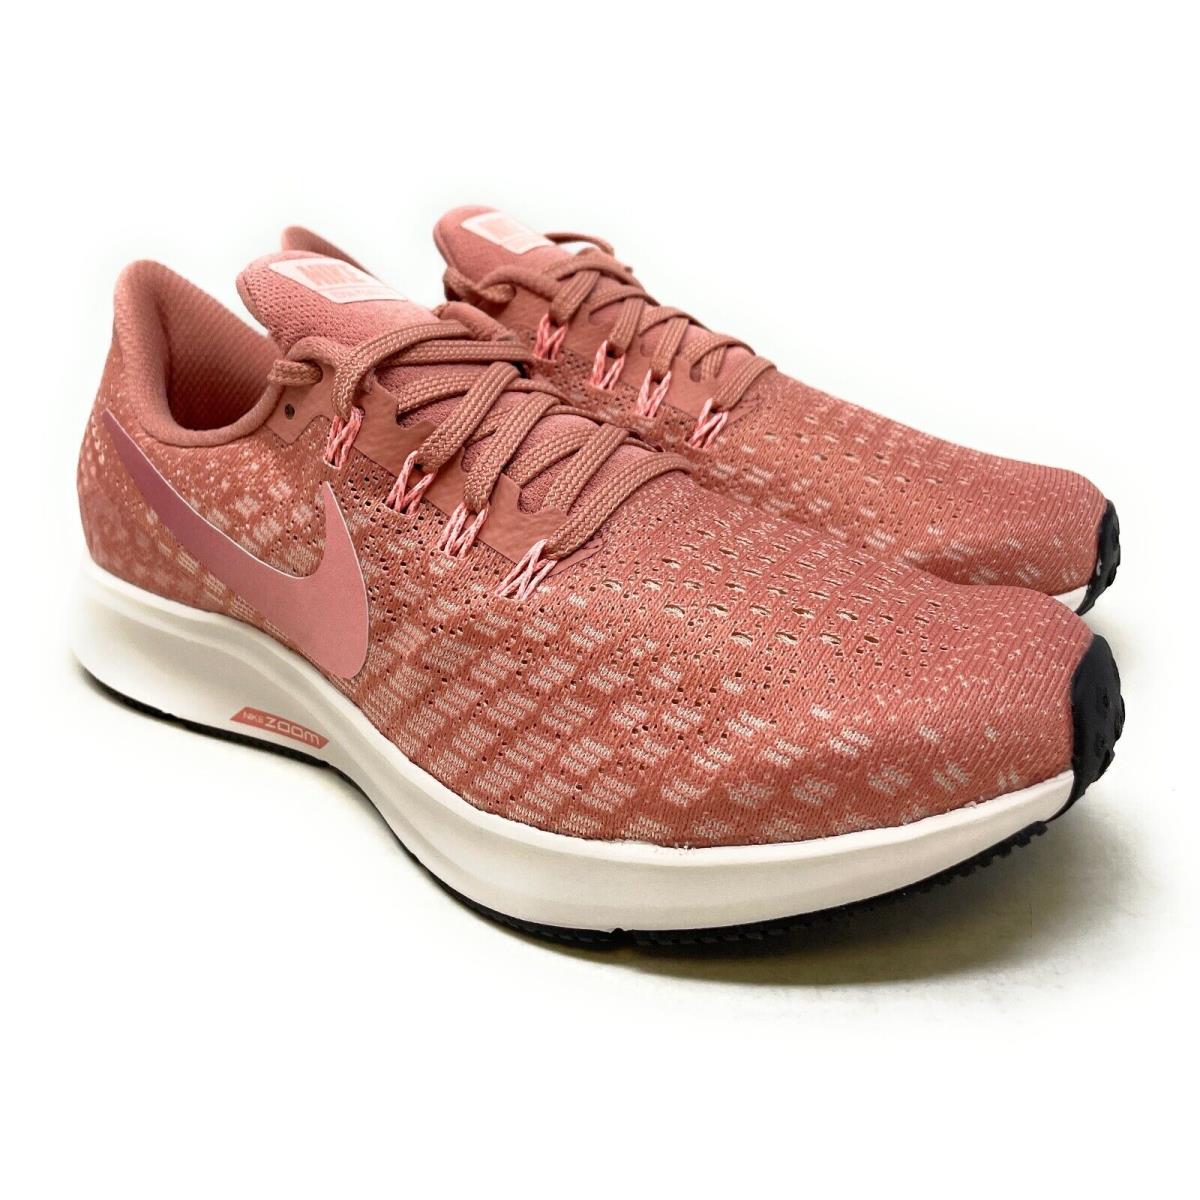 Nike Womens Air Zoom Pegasus 35 Running Shoes Rust Pink/tropical Pink 942855-603